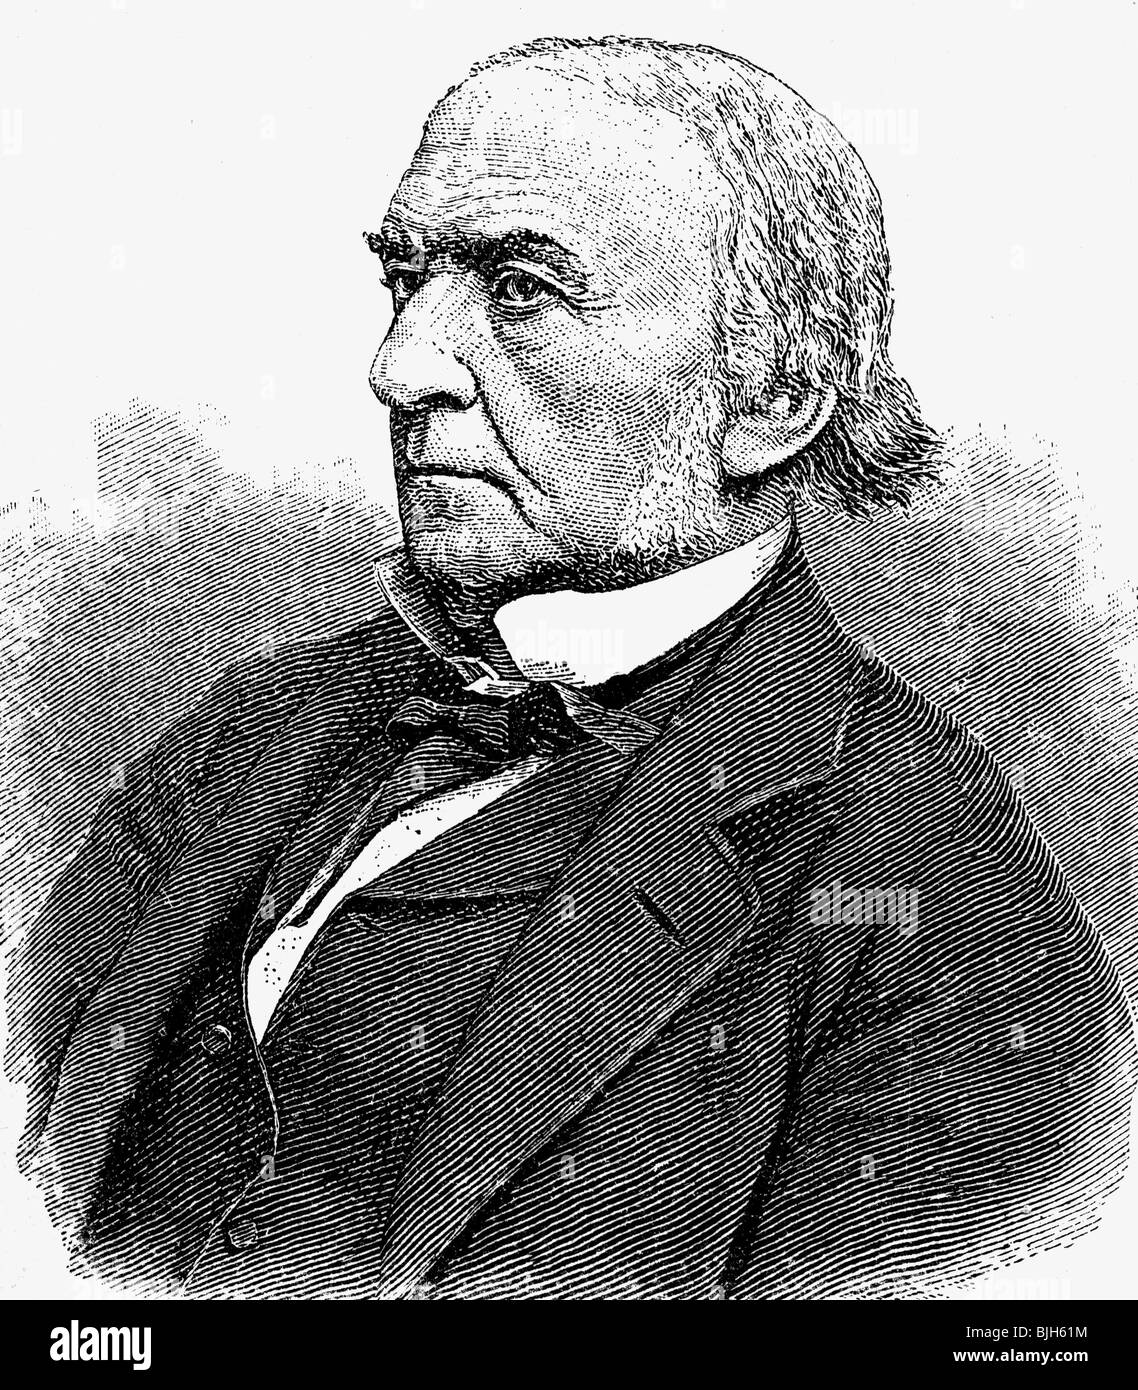 Gladstone, William Eward, 29.12.1809 - 19.5.1898, British politician (Lib.), Prime Minister 23.4.1800 - 9.6.1885, portrait,  wood engraving, 1884, , Stock Photo